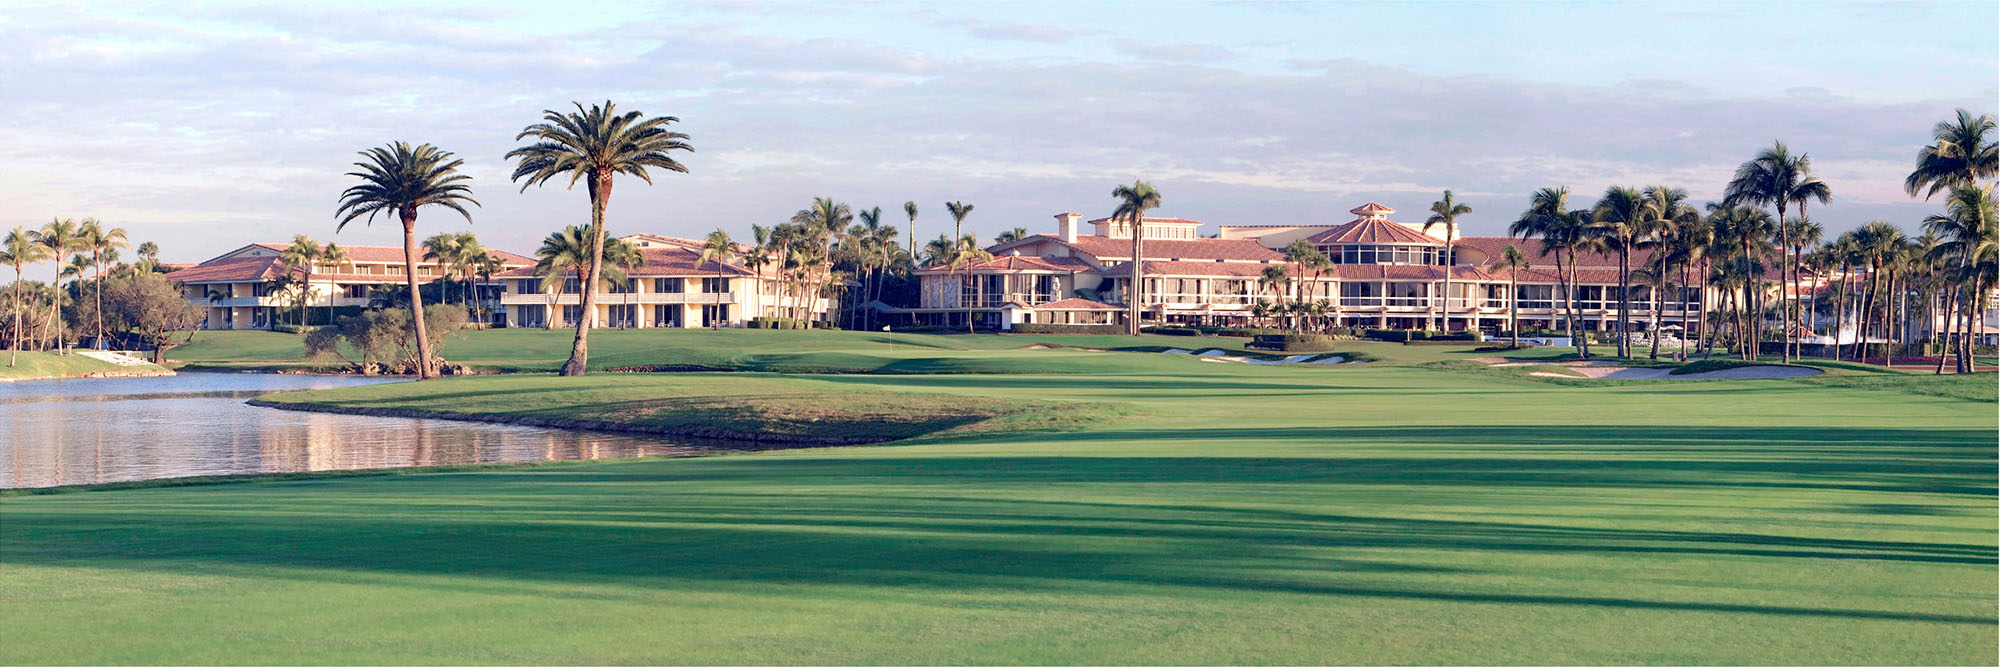 Golf Course Image - Trump National Doral Miami No. 18